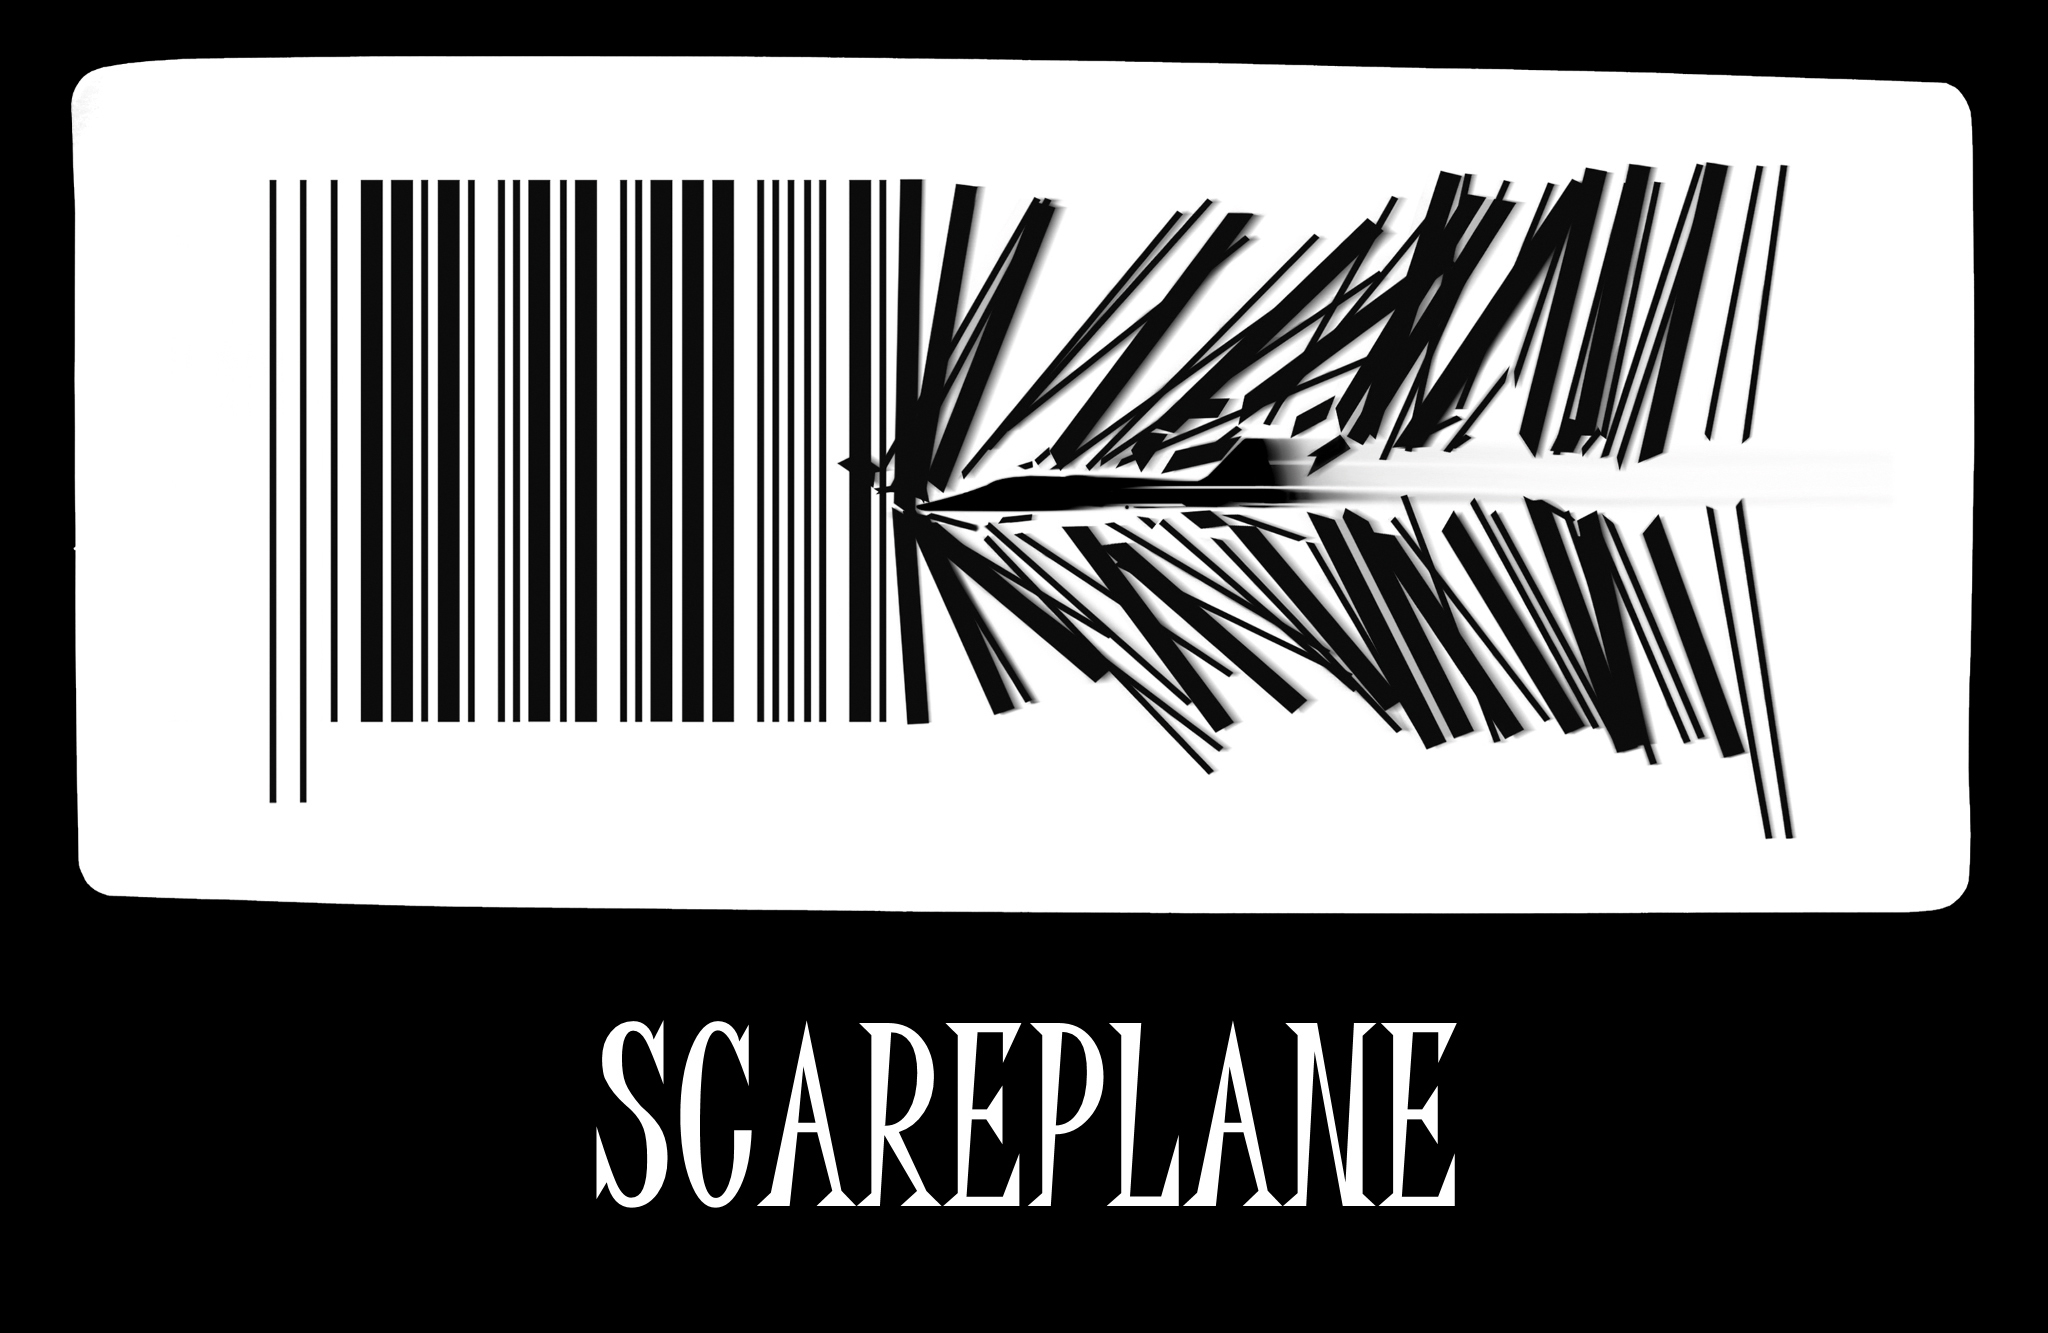 plane-crash-barcode-1183300